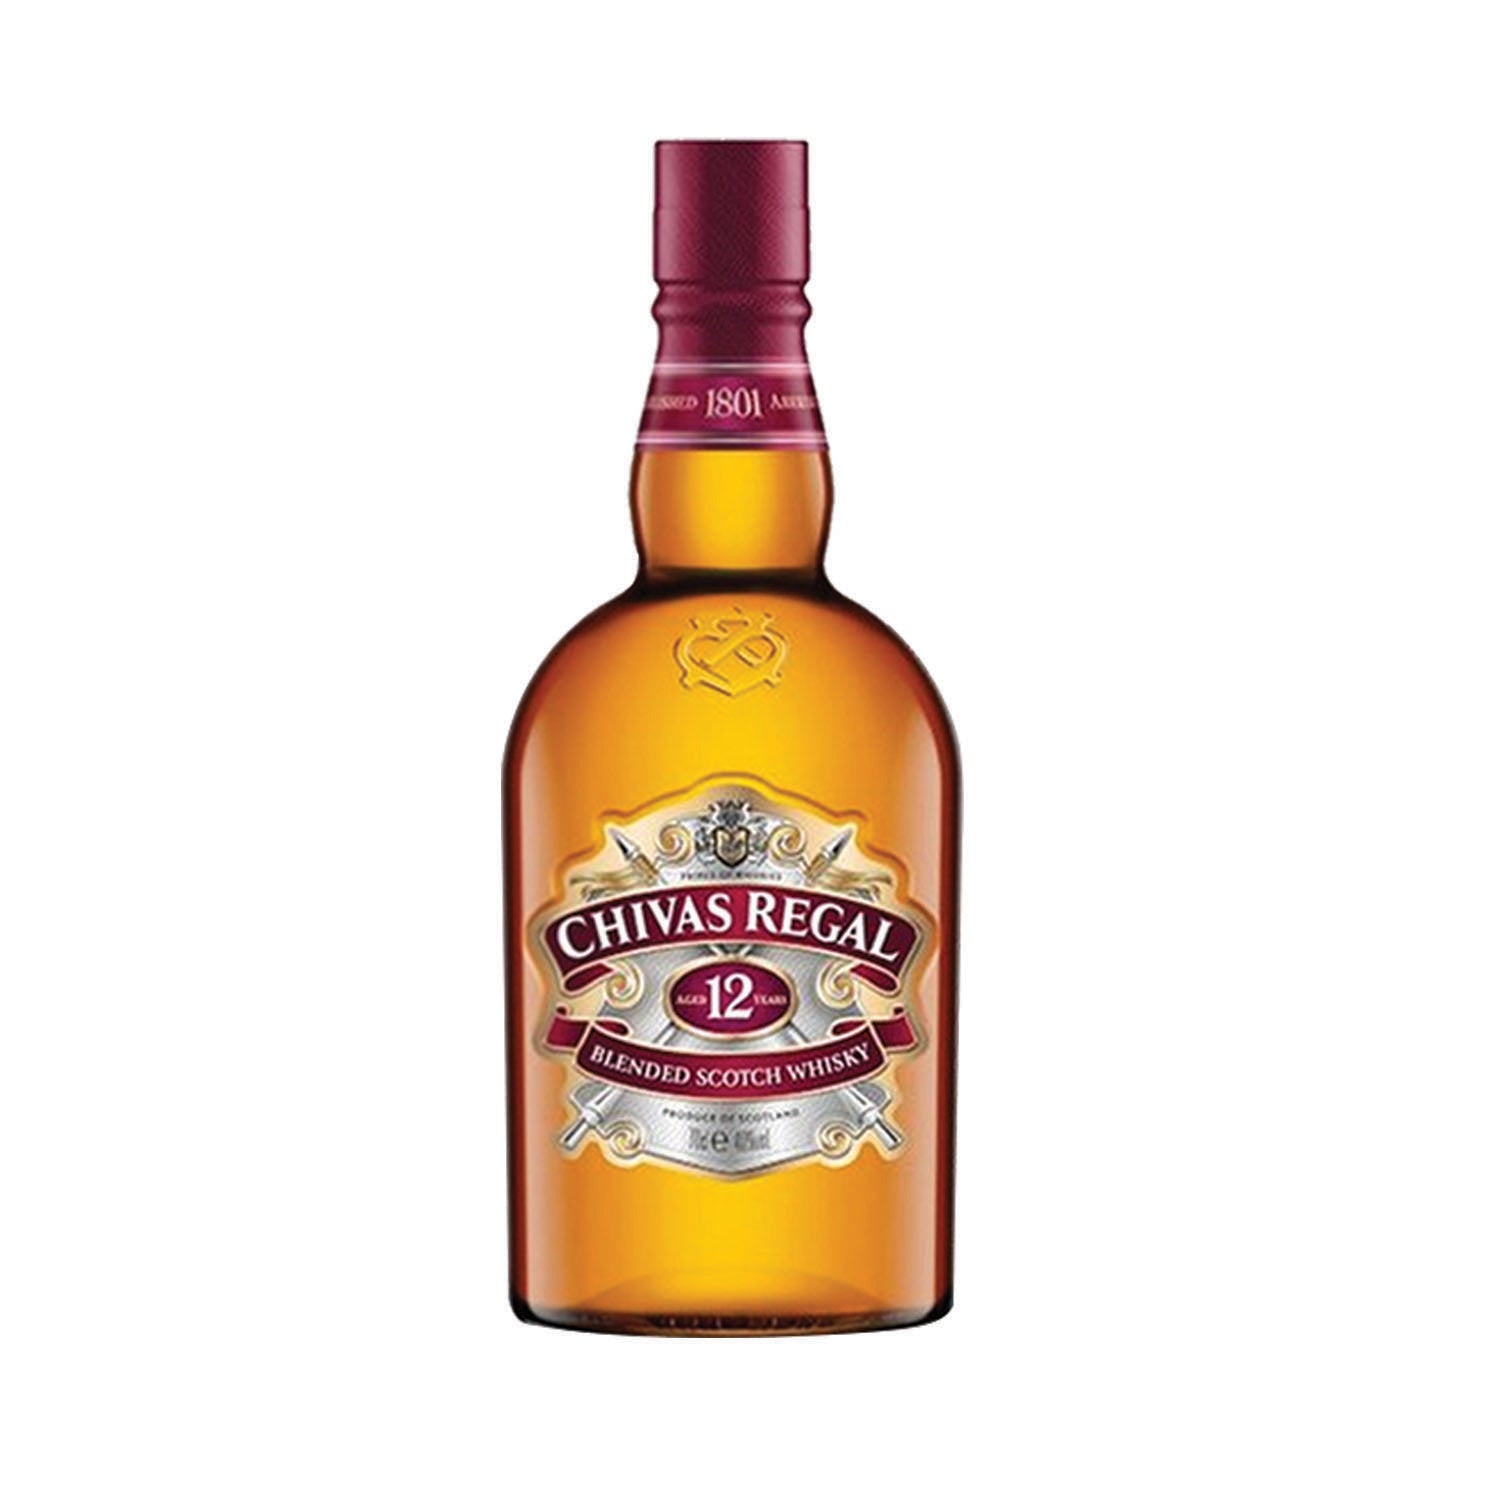 stl>Chivas Regal 12 Year Old Scotch Whisky - 750 ml